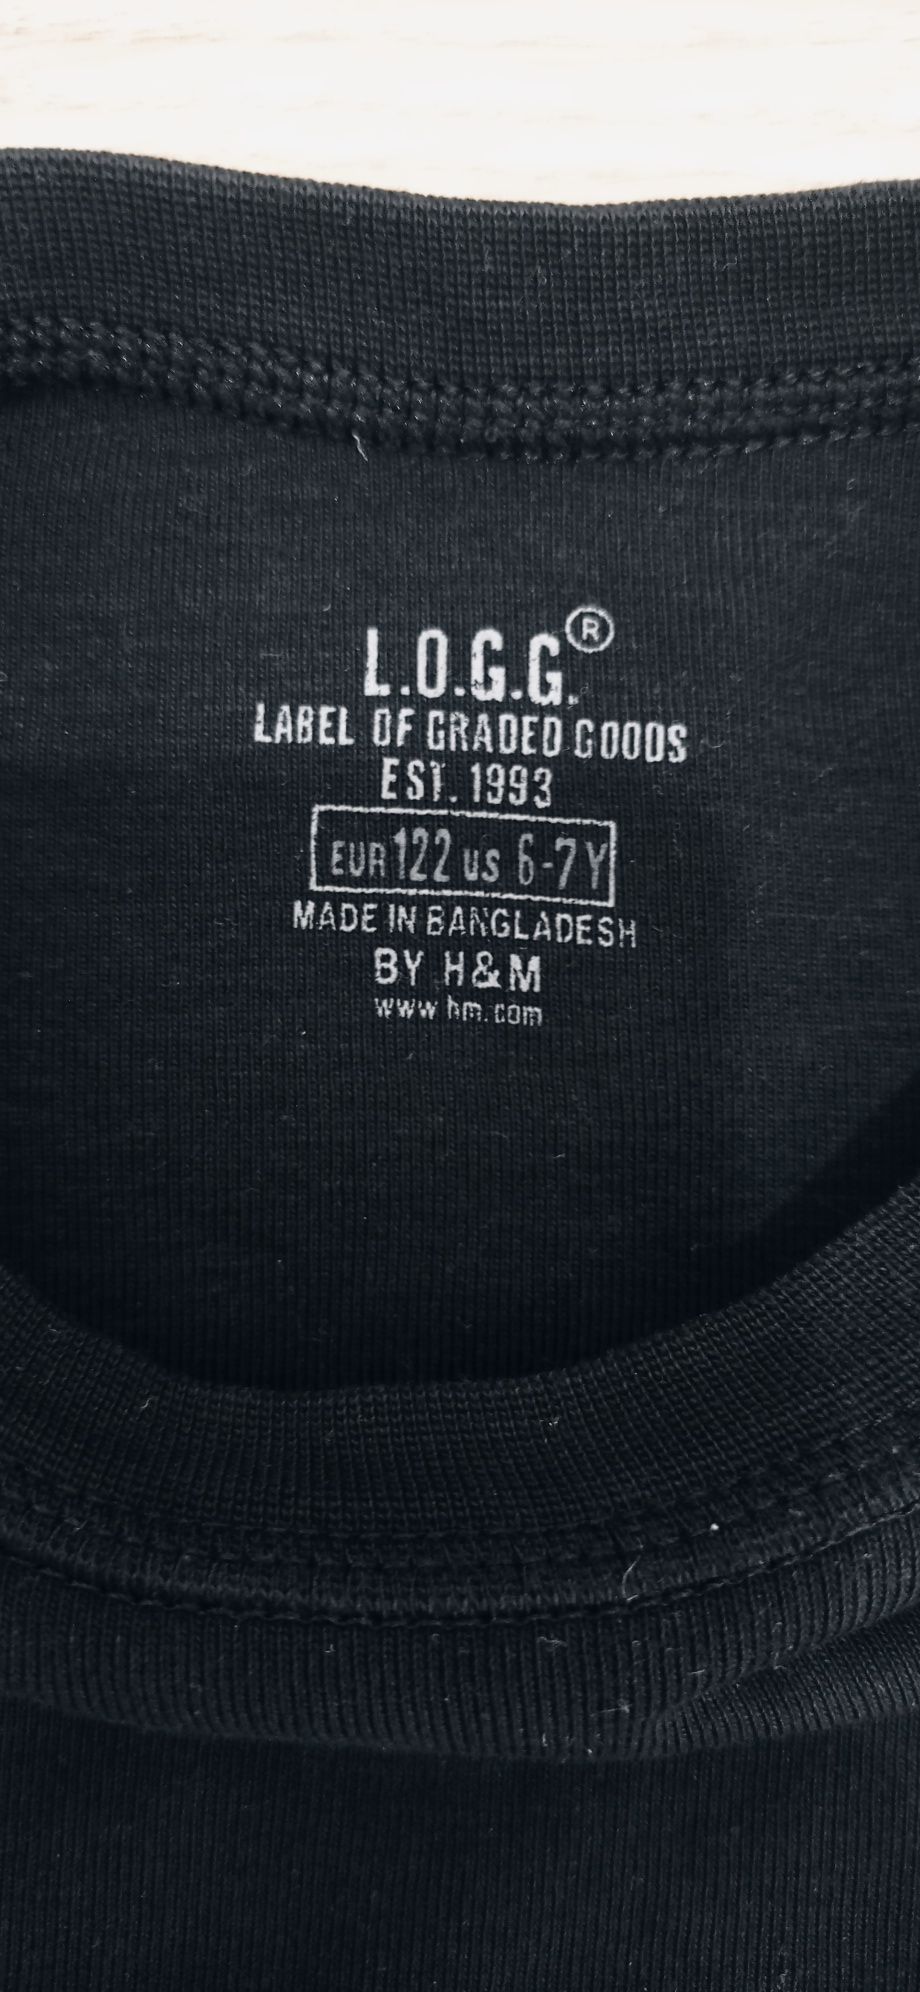 Podkoszulka, t-shirt H&M rozmiar 116